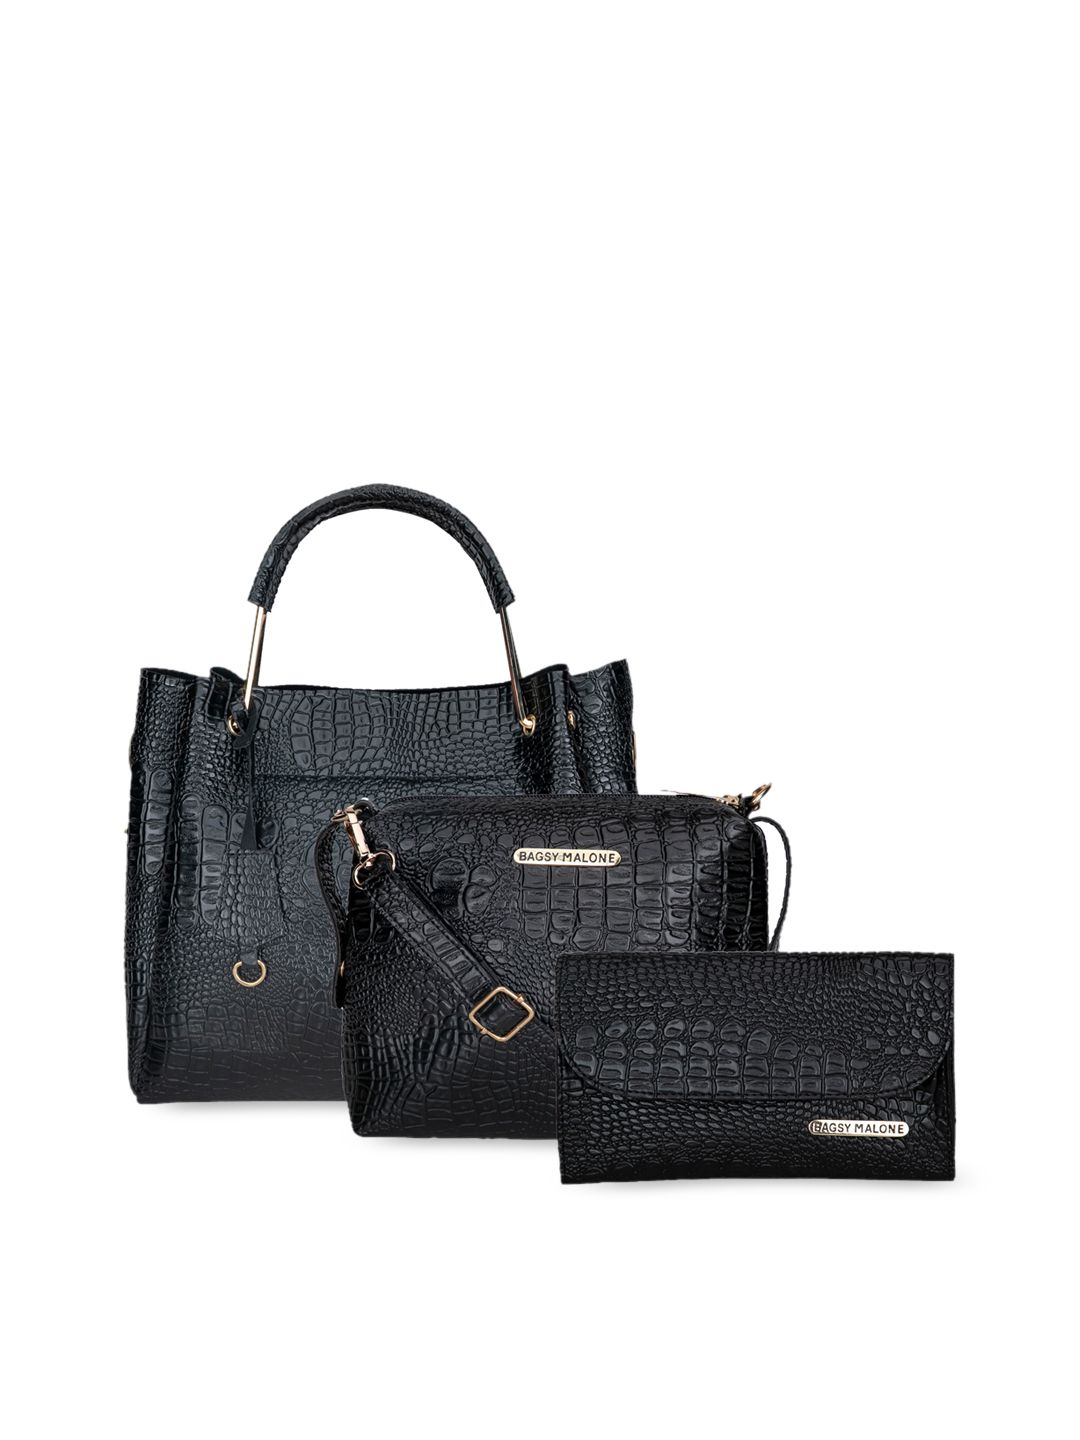 Bagsy Malone Black Set of 3 Crocodile-Skin Textured Handheld Bag Price in India